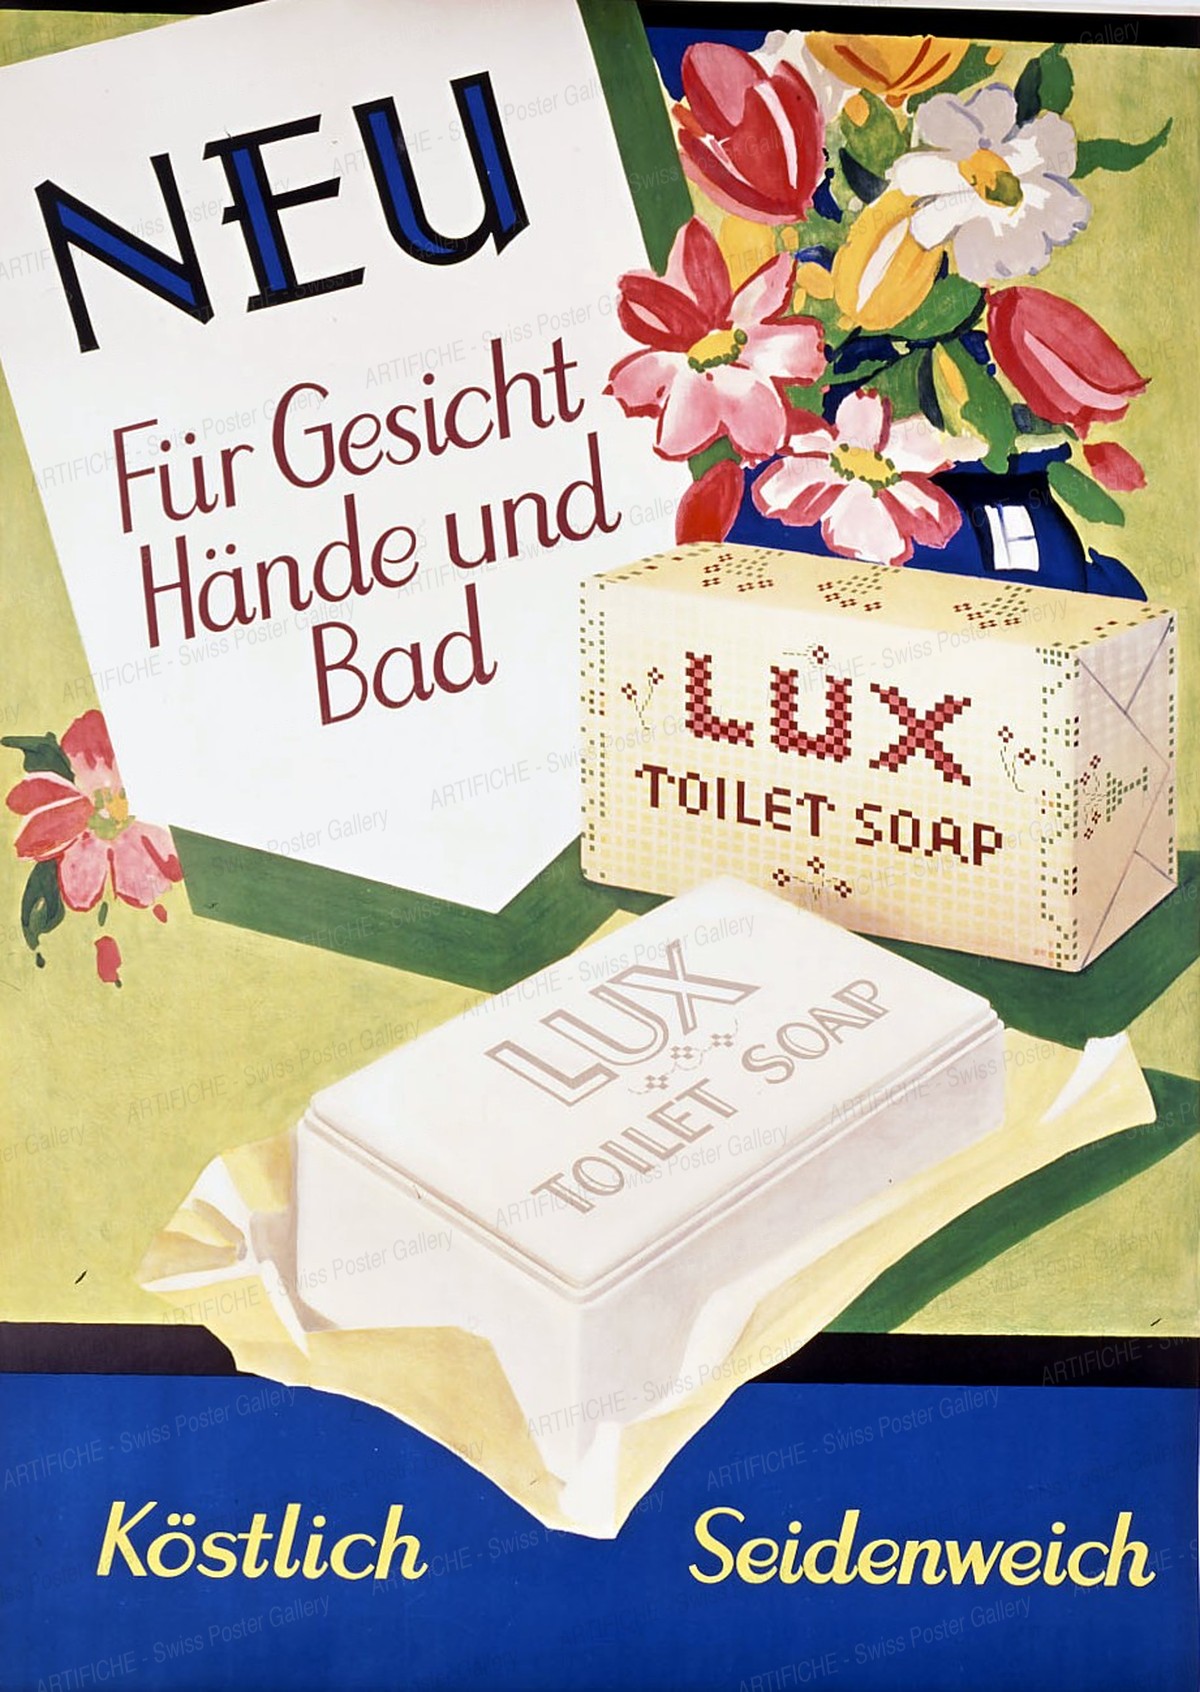 LUX Toilet Soap, Artist unknown